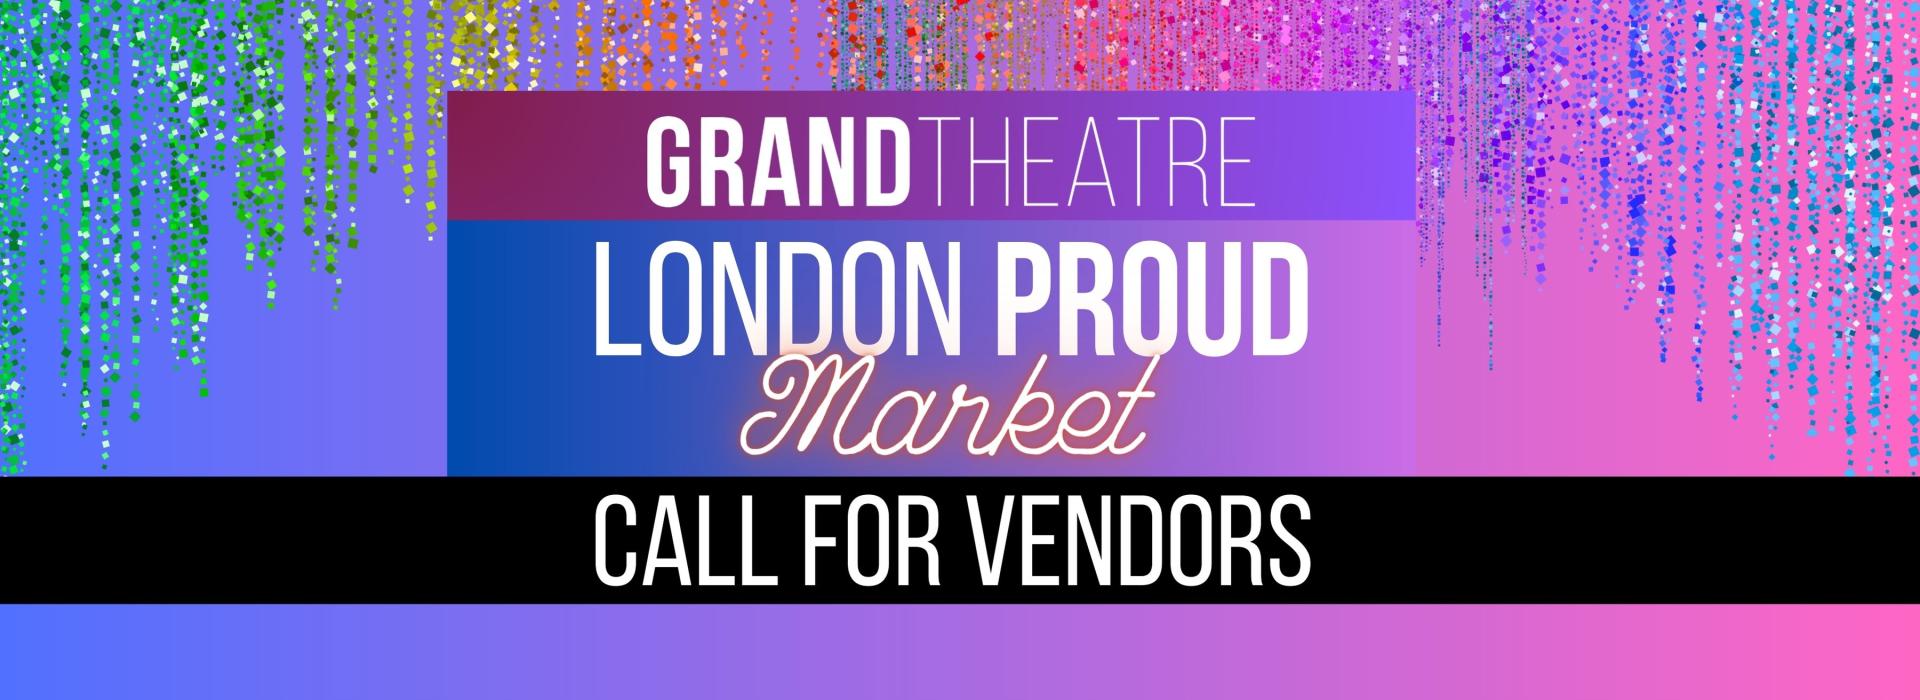 London Proud Market - Call For Vendors